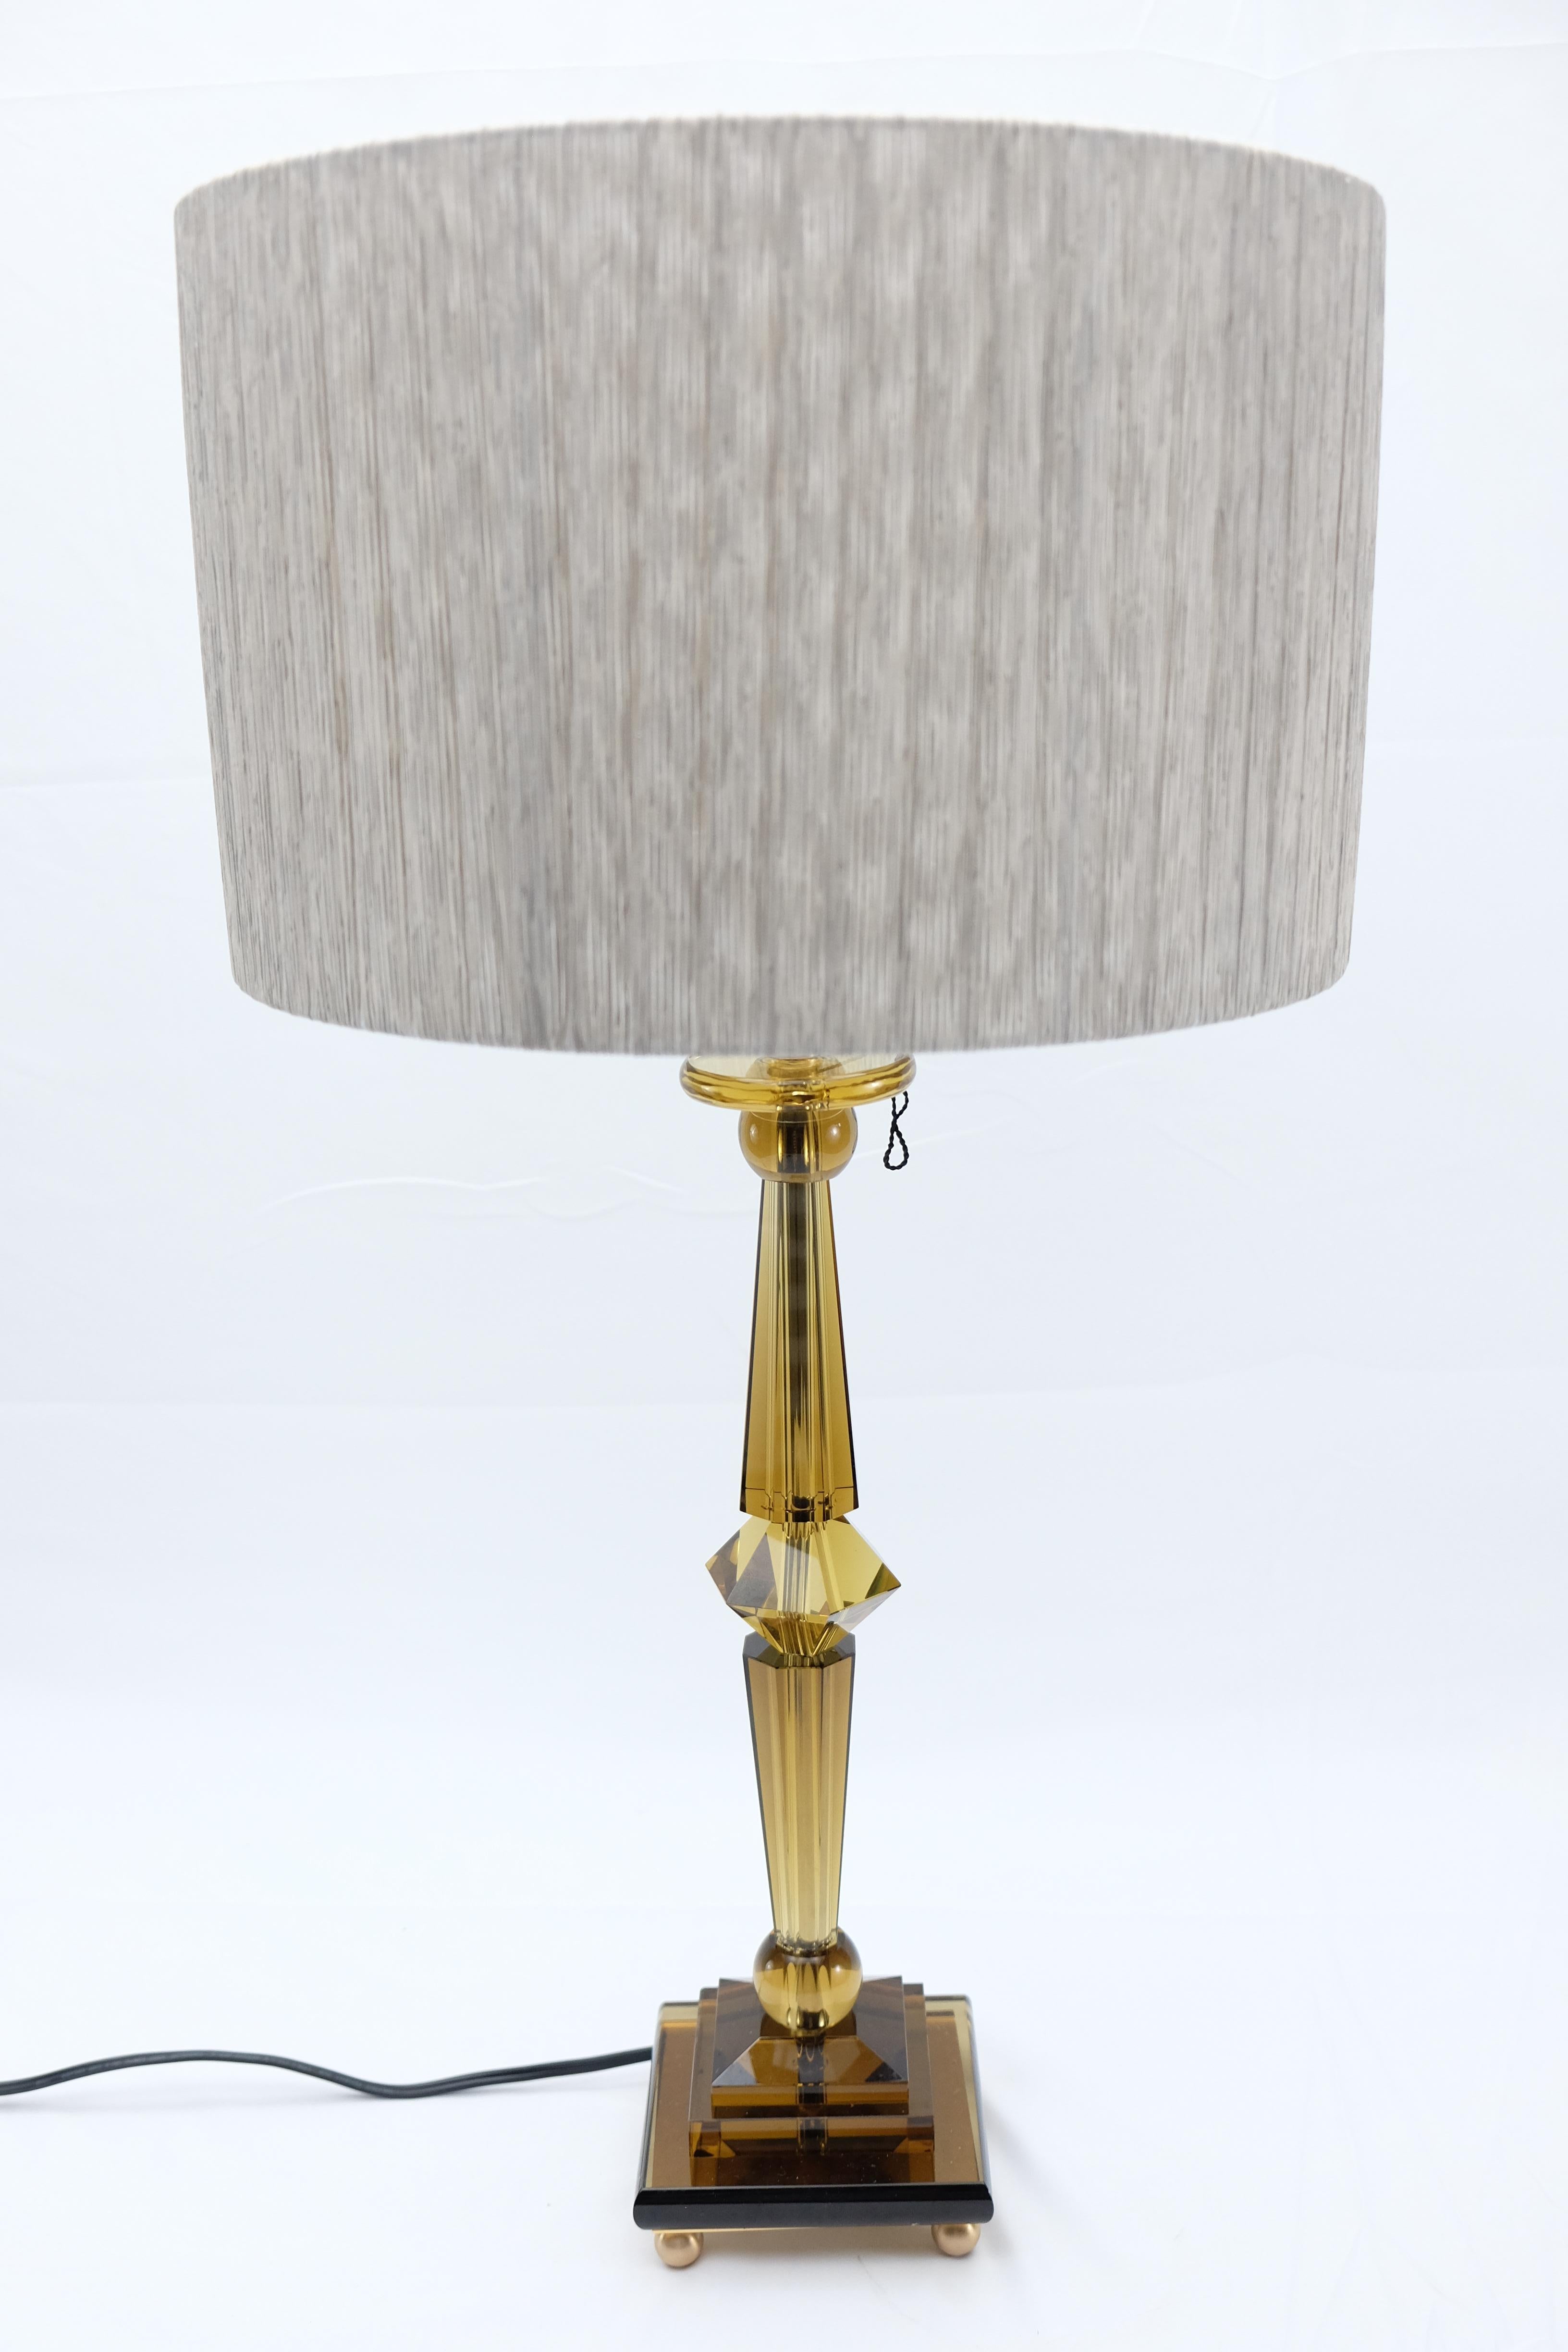 Modern Attilio Amato for Laudarte Srl Prisma Big Table Lamp, Pair Available For Sale